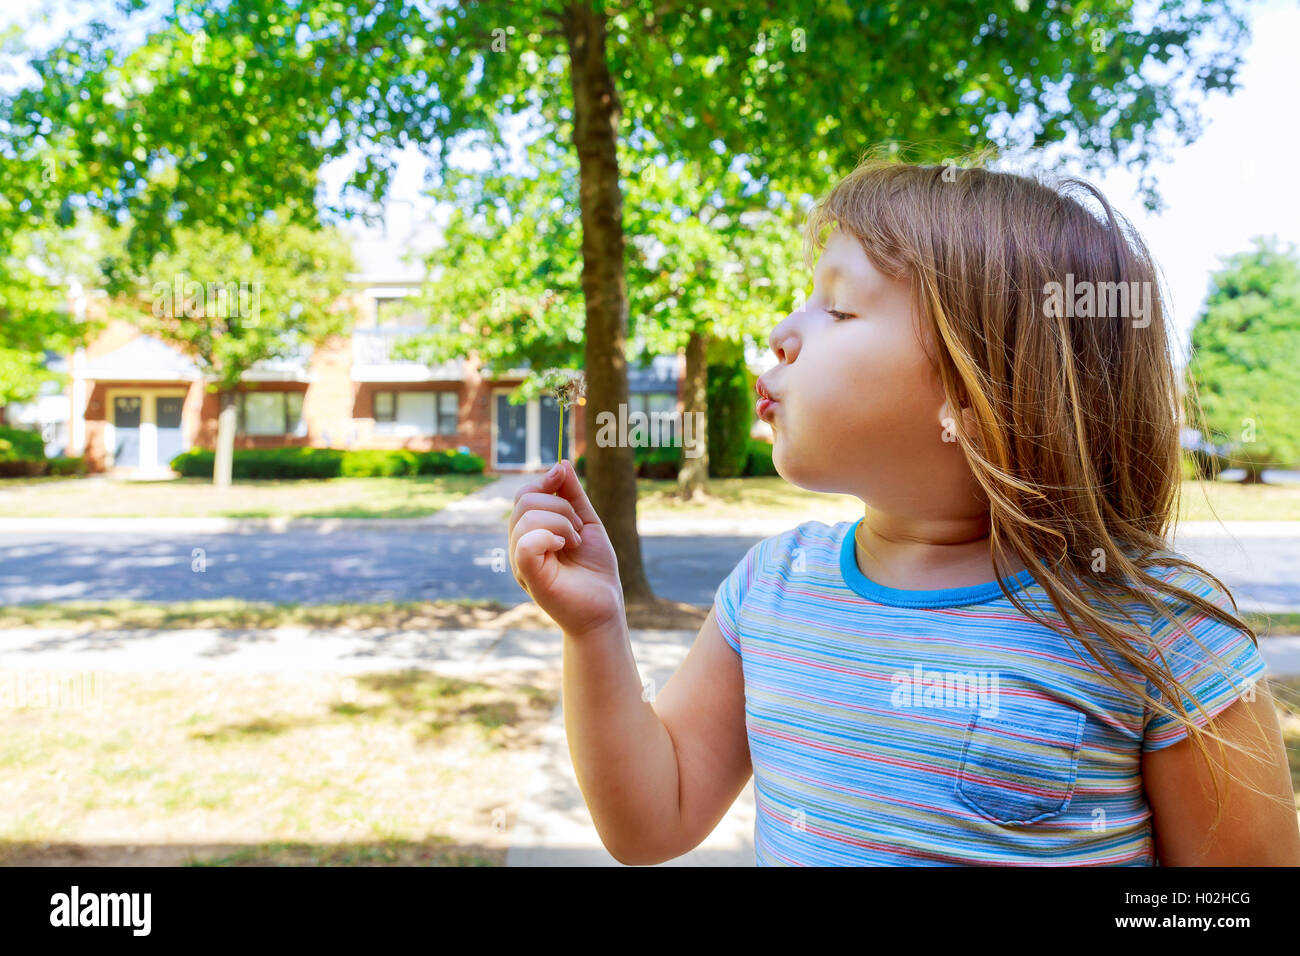 Cute blond little girl blowing a dandelion Stock Photo